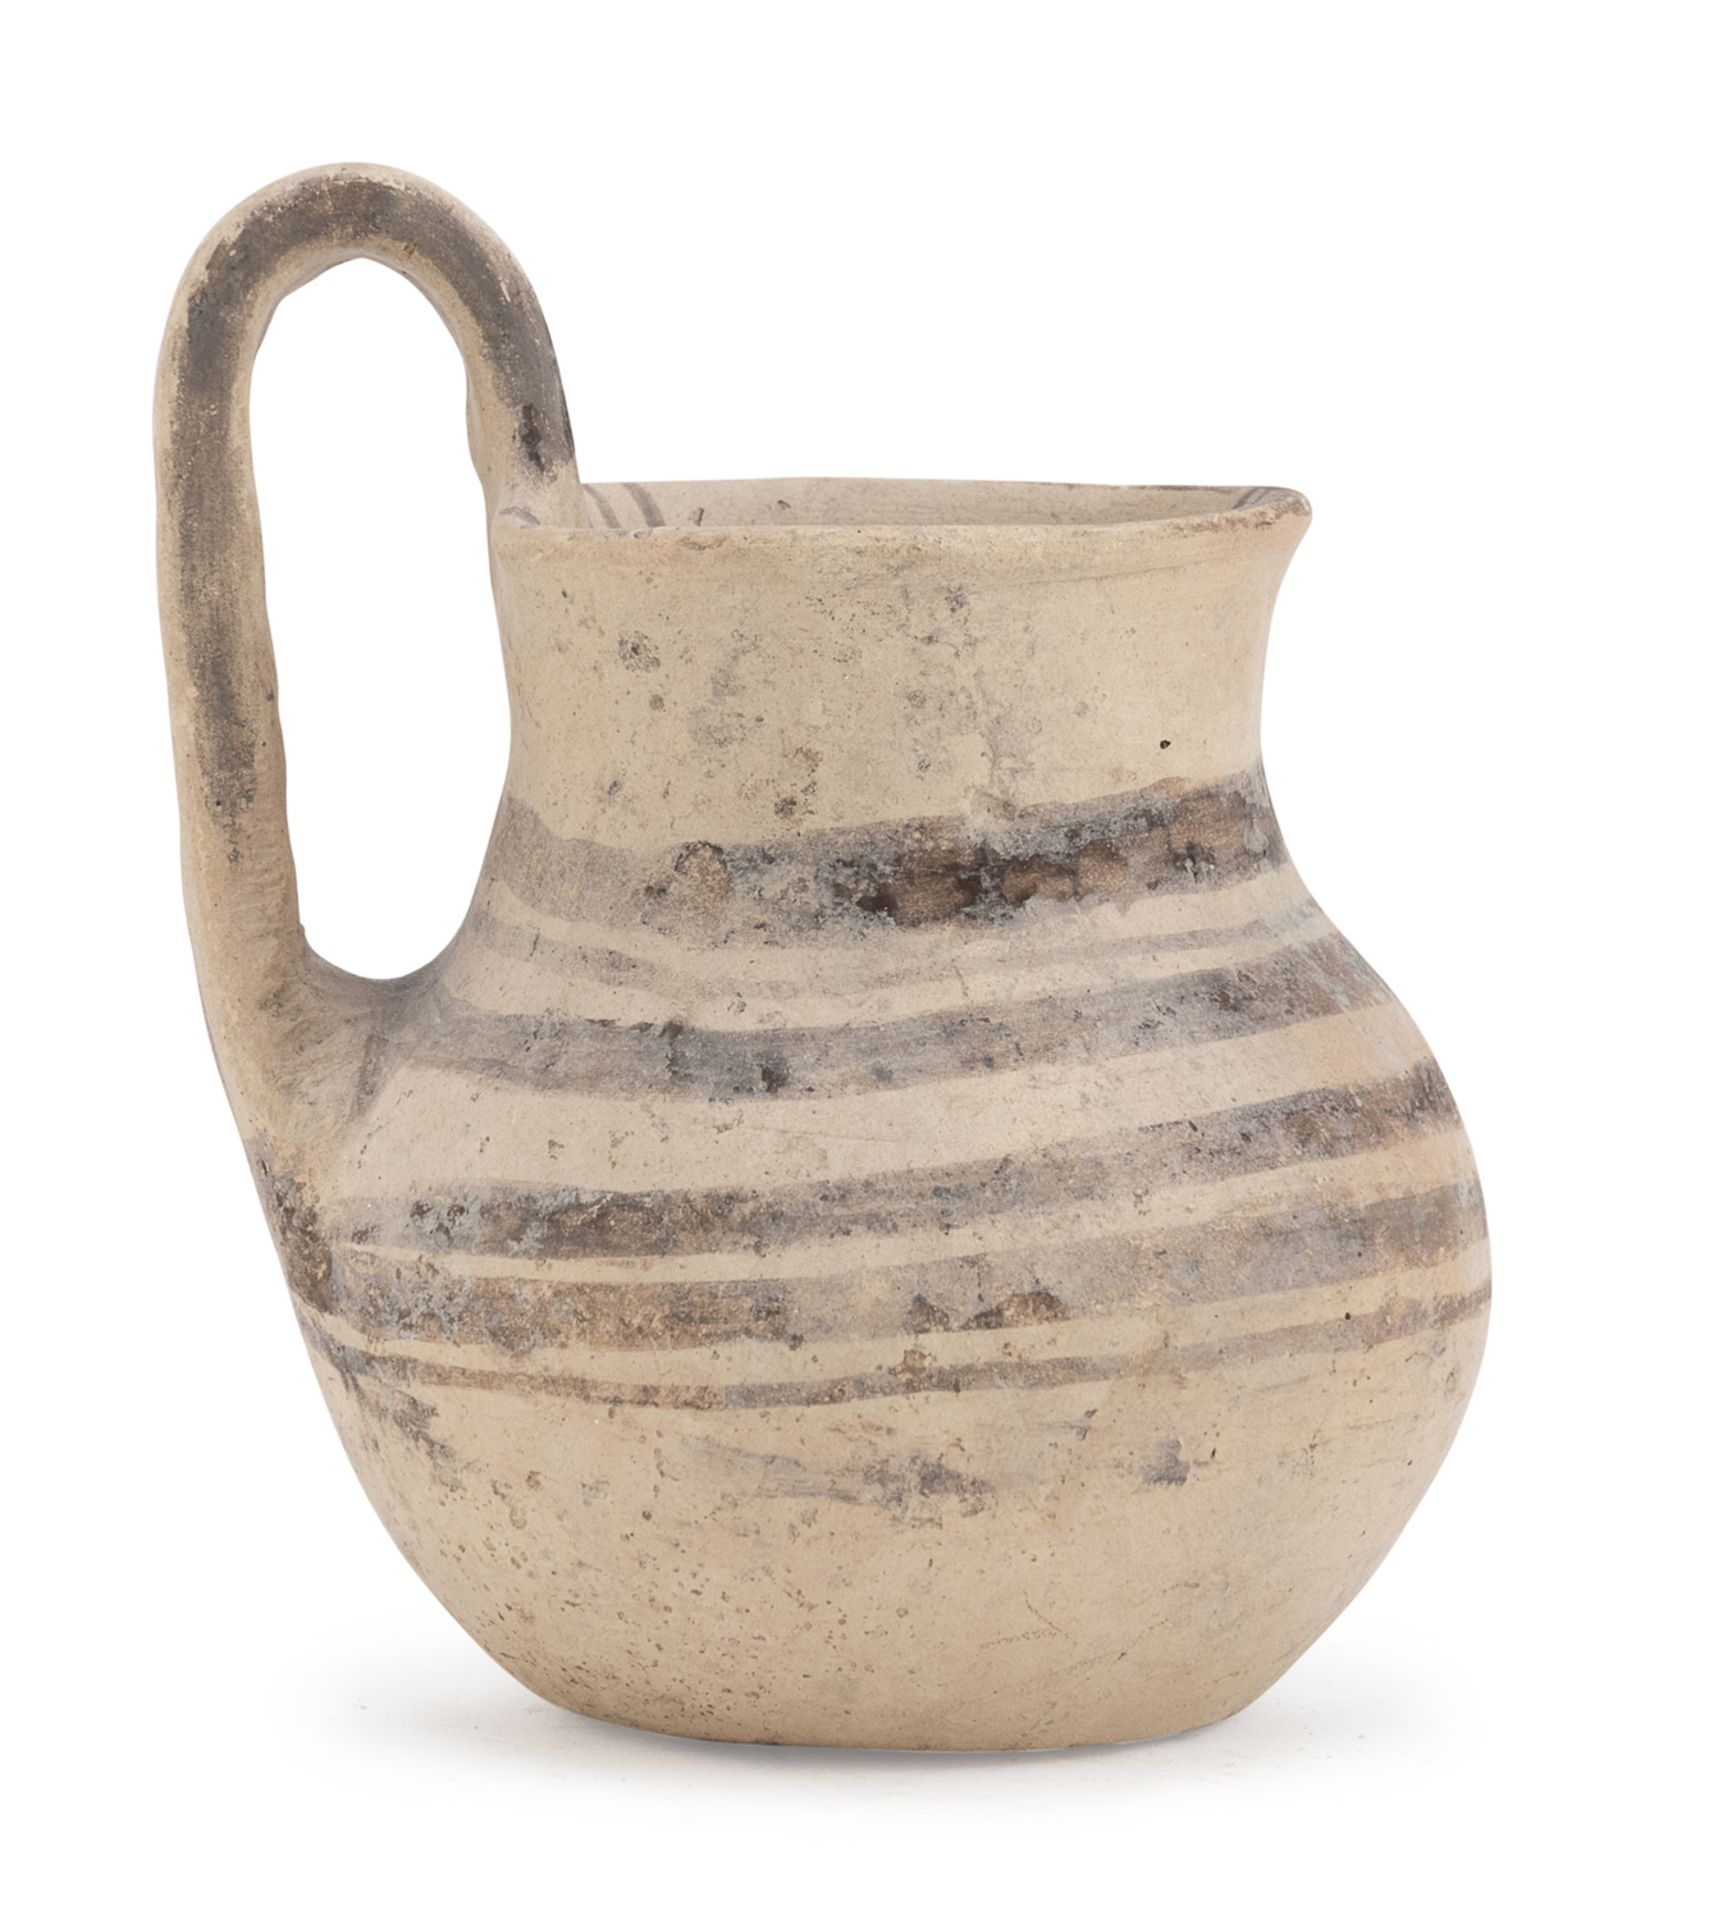 DAUNIA JUG 5th CENTURY BC (not exportable from Italy)